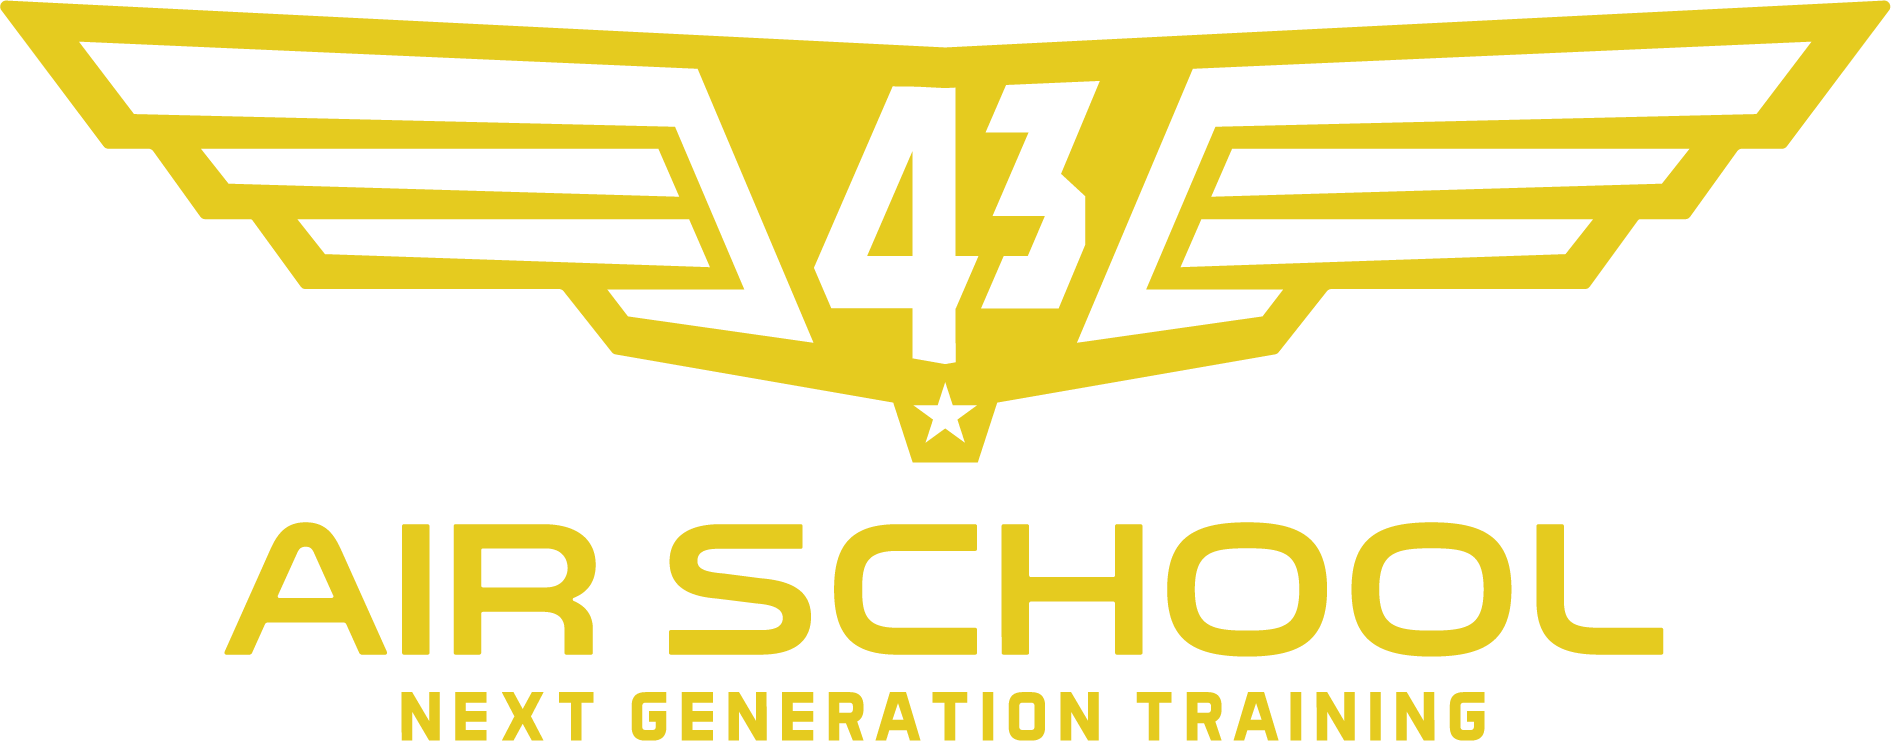 43 Air School Logo